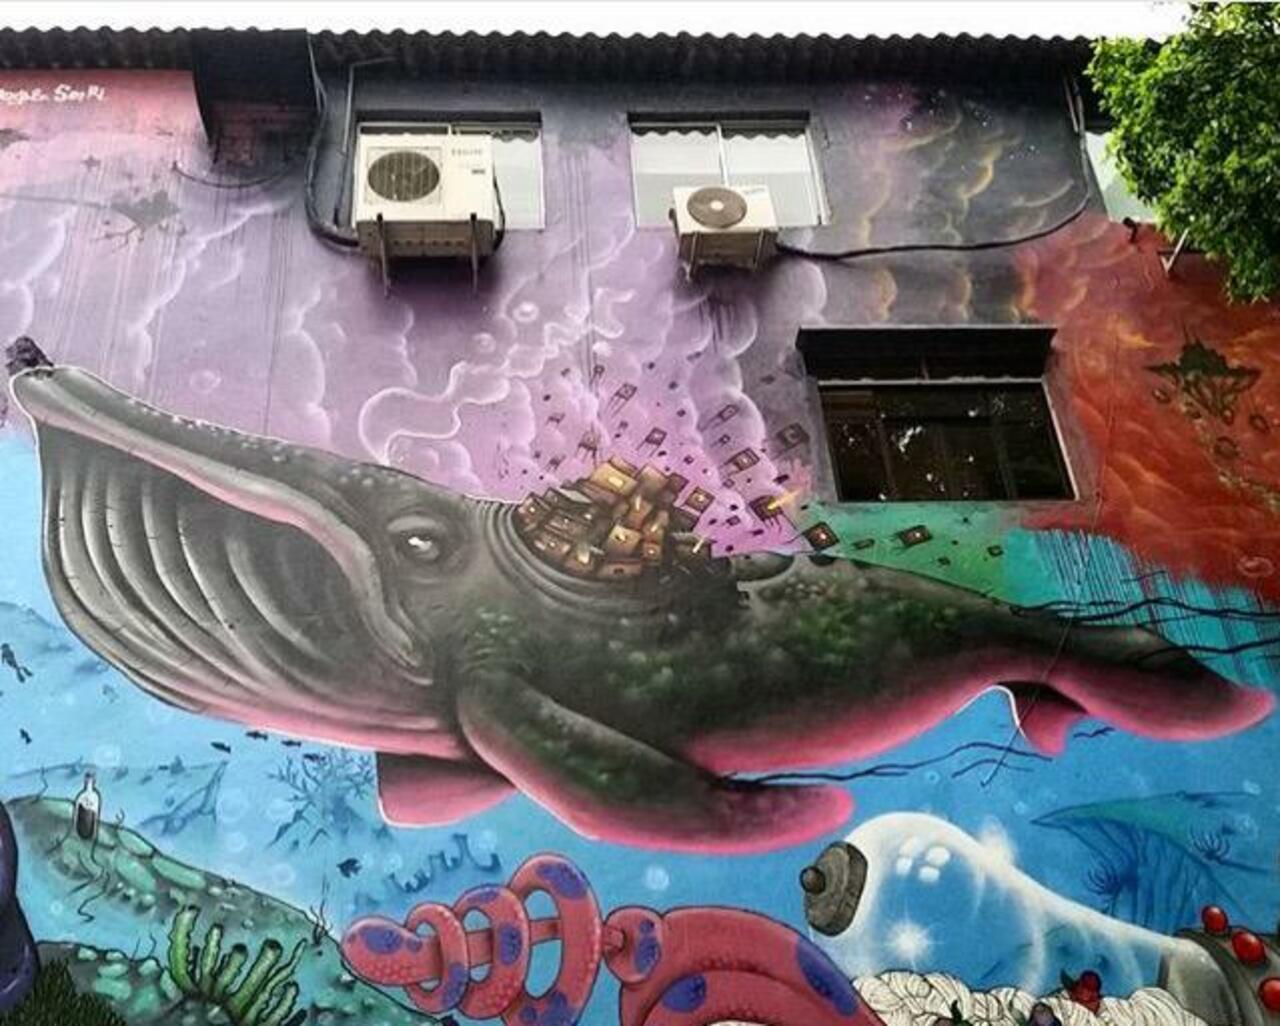 Street Art by joks_johnes Pinheiros, São Paulo 

#art #mural #graffiti #streetart http://t.co/YkJYbXfdFI